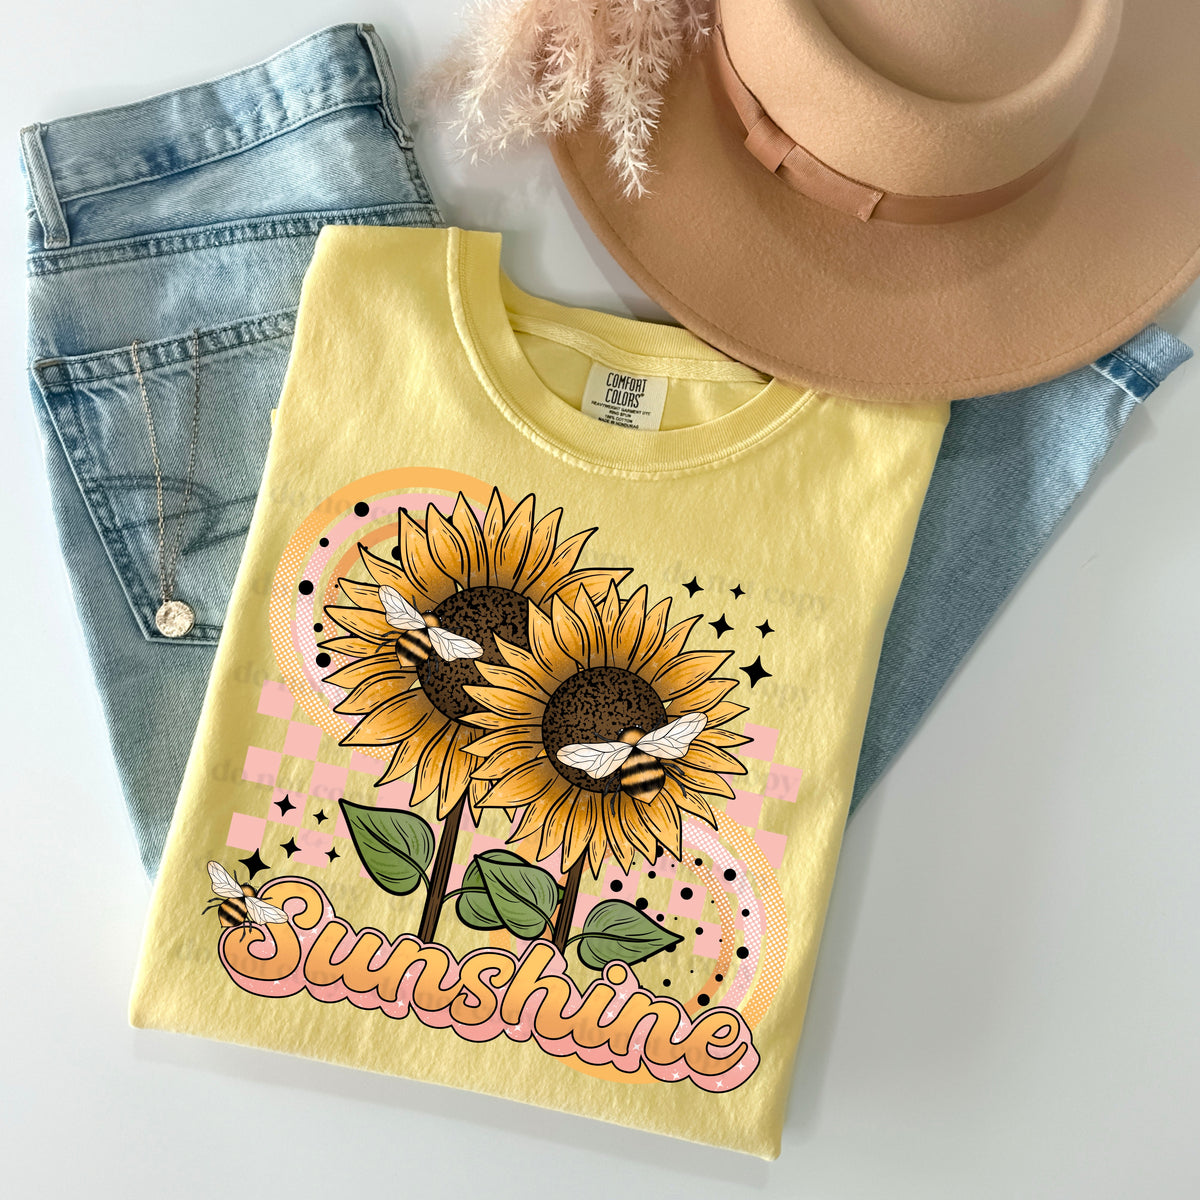 Sunshine sunflowers